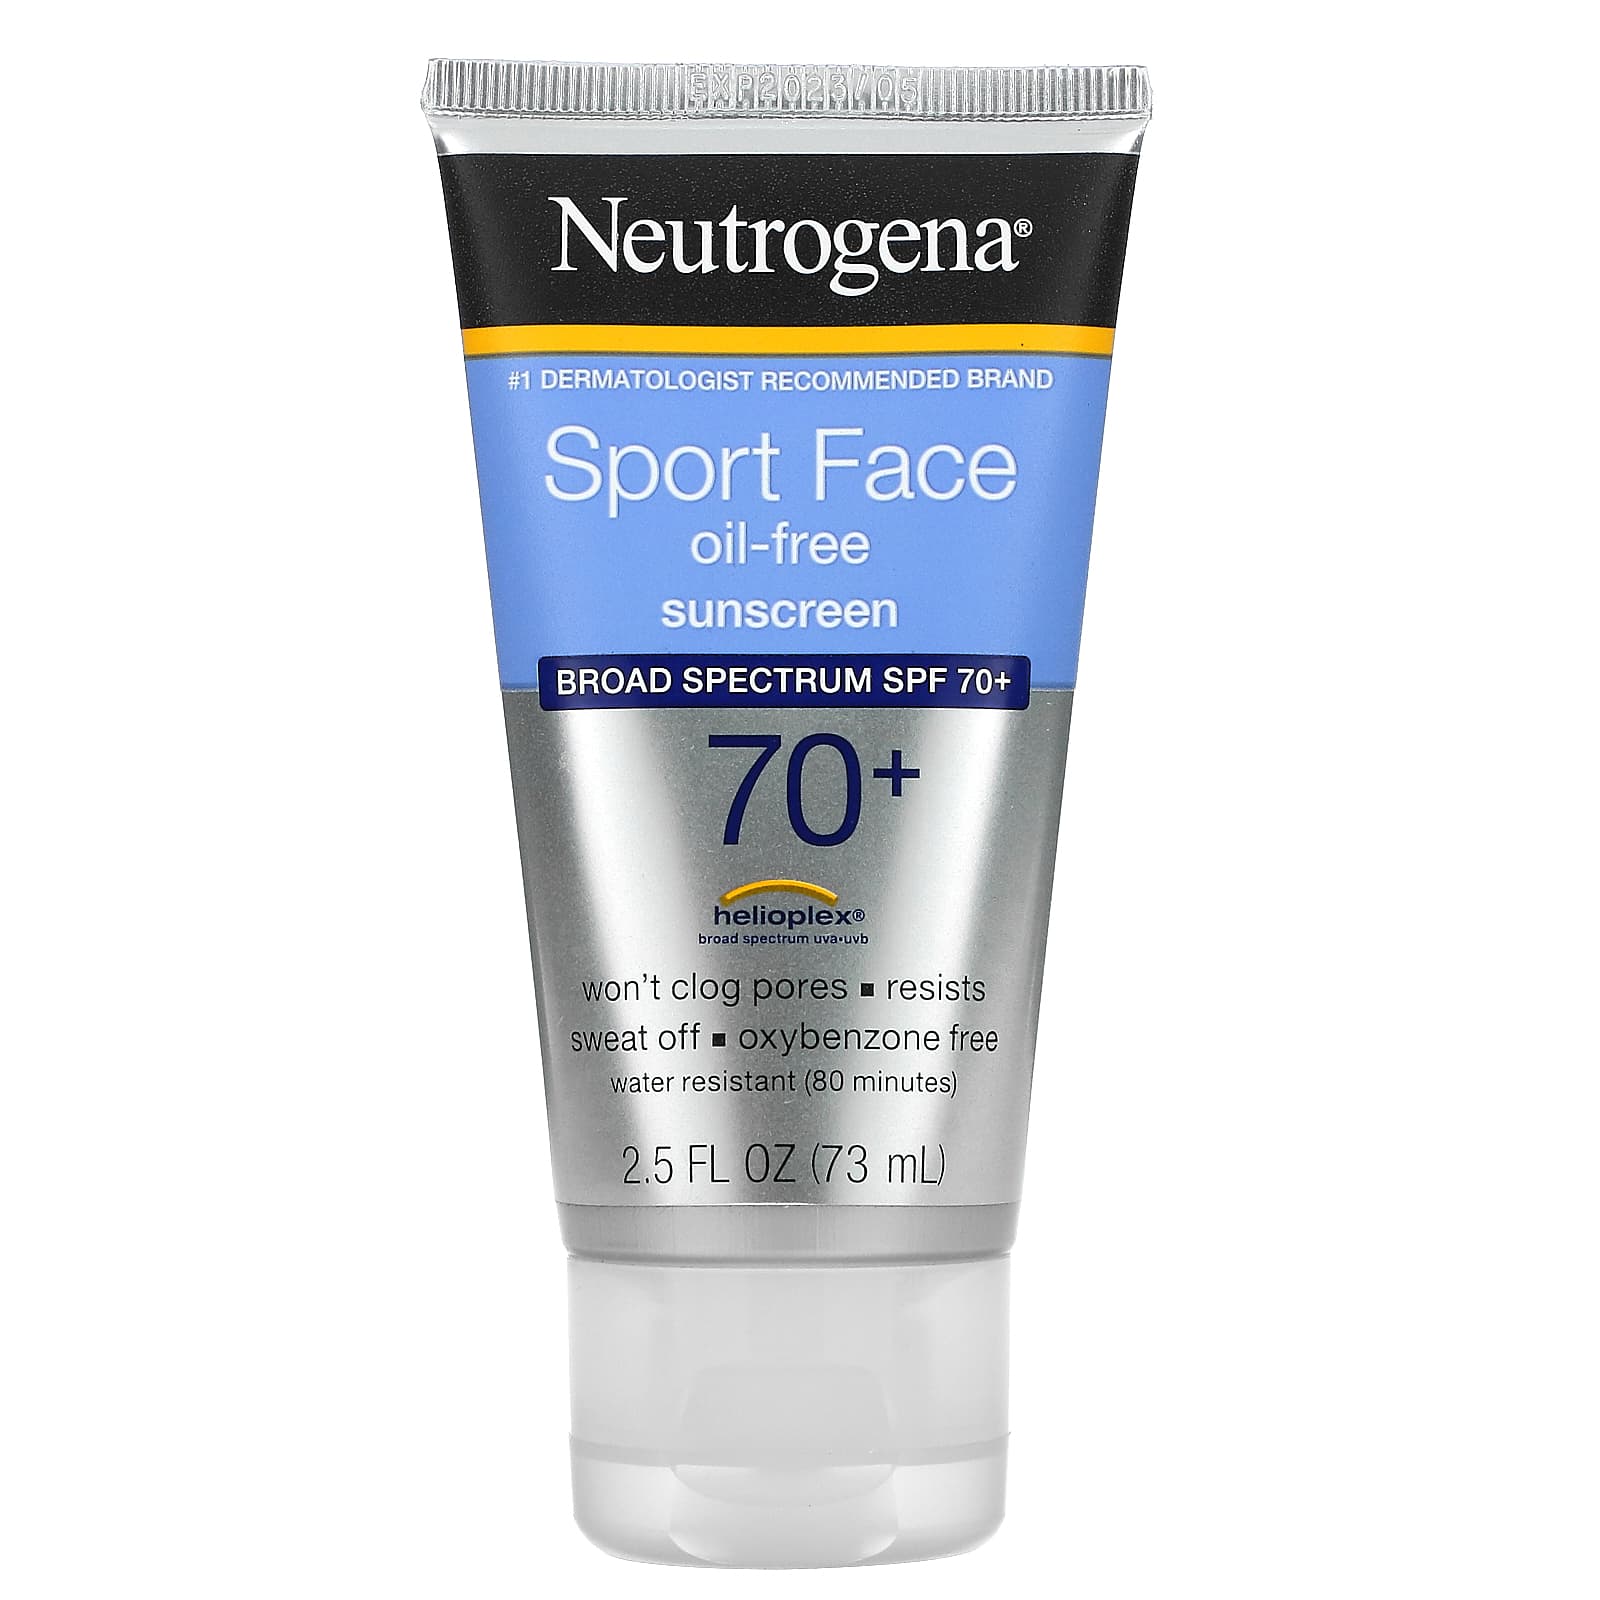 Neutrogena, Protector solar rostro deportivo sin aceite, 73 ml oz.